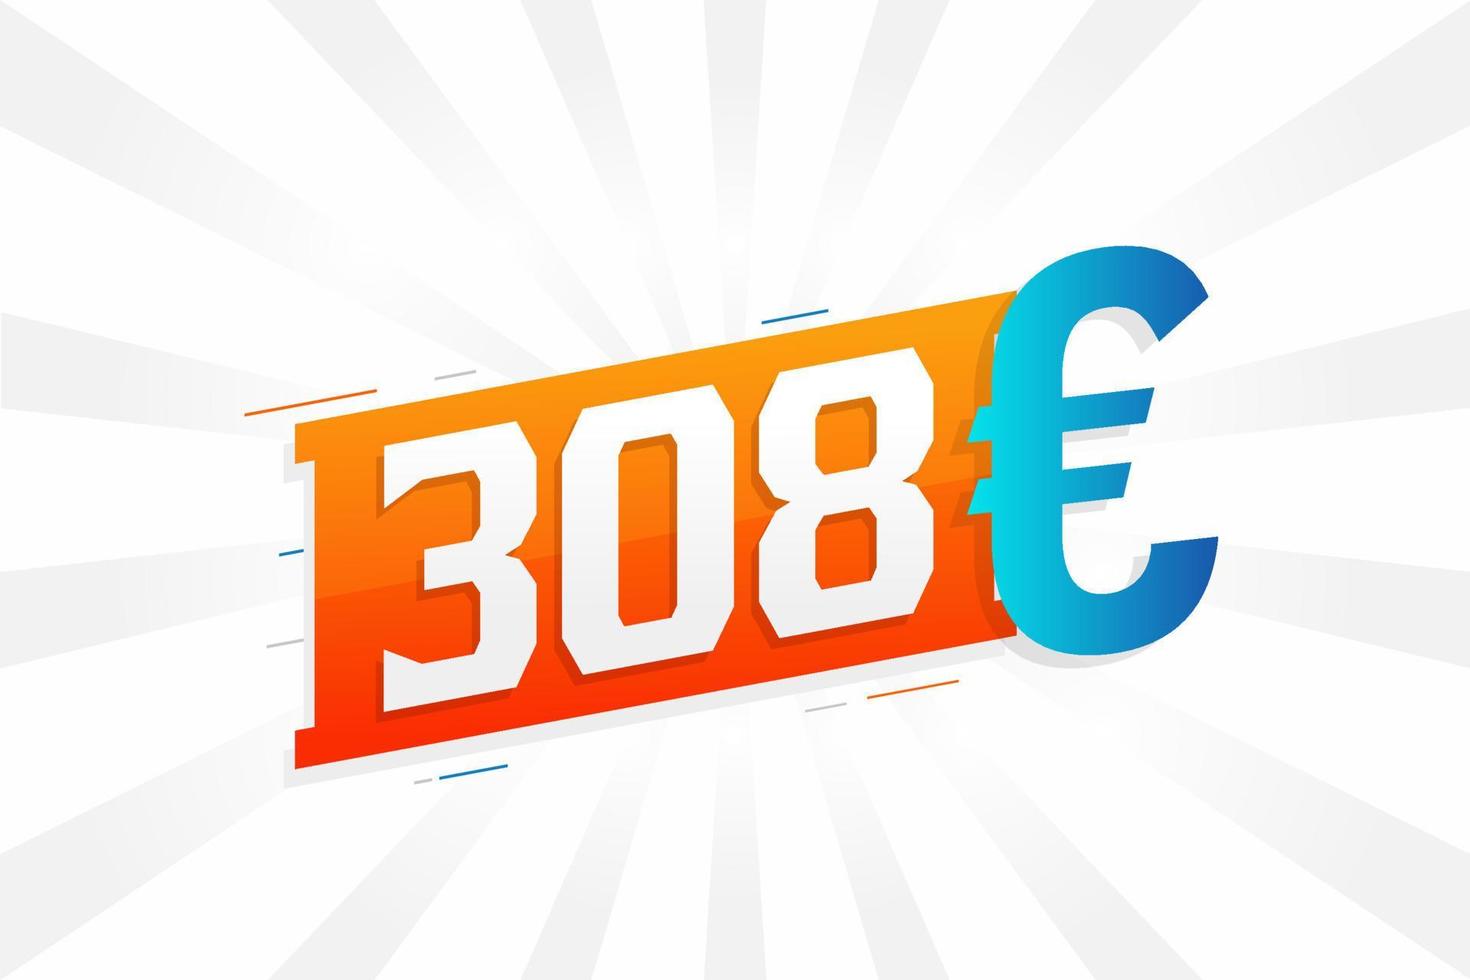 Símbolo de texto vectorial de moneda de 308 euros. 308 euro vector de stock de dinero de la unión europea